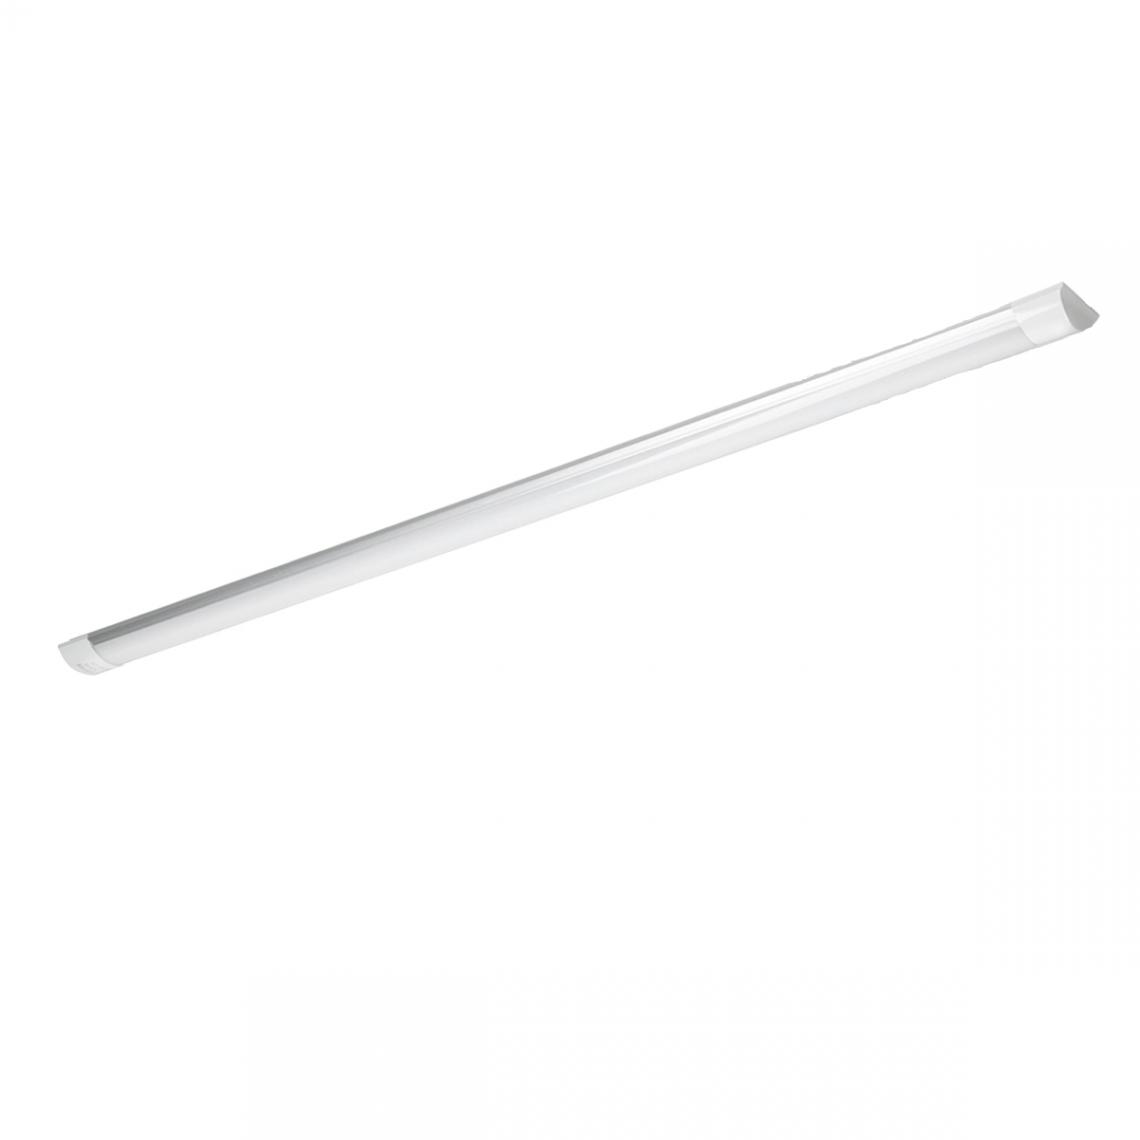 Ecd Germany - Set 2x LED batten tube 36W 120cm blanc froid surface luminaire slim barre plafond - Tubes et néons